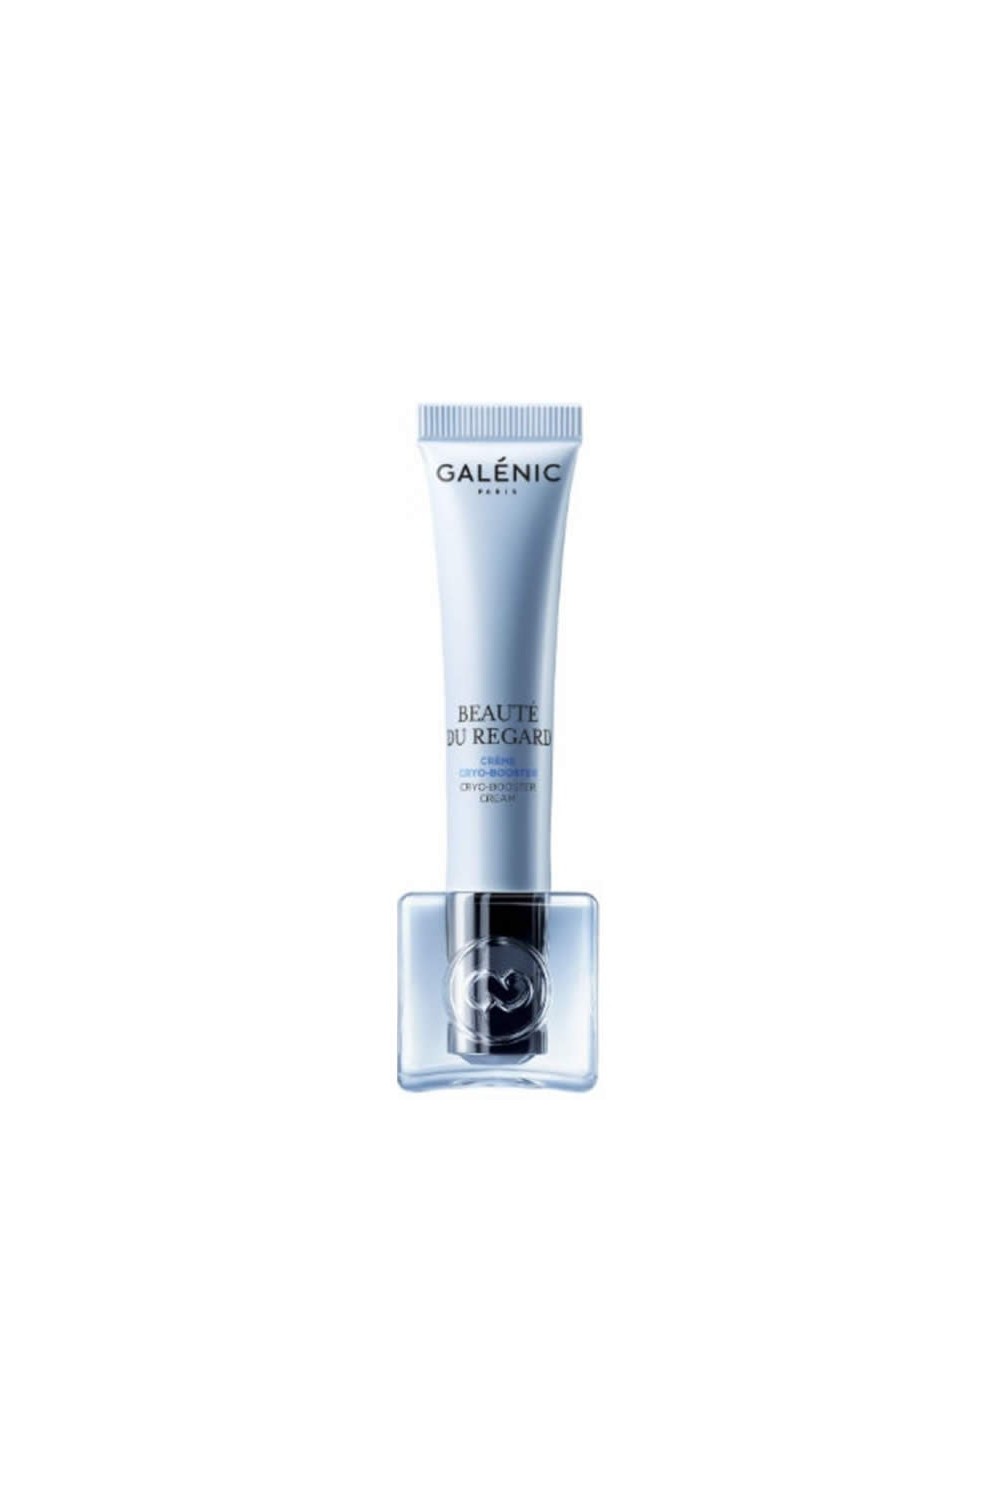 GALÉNIC - Galénic Beaute Du Regard Cryo Booster Eye Cream 15ml